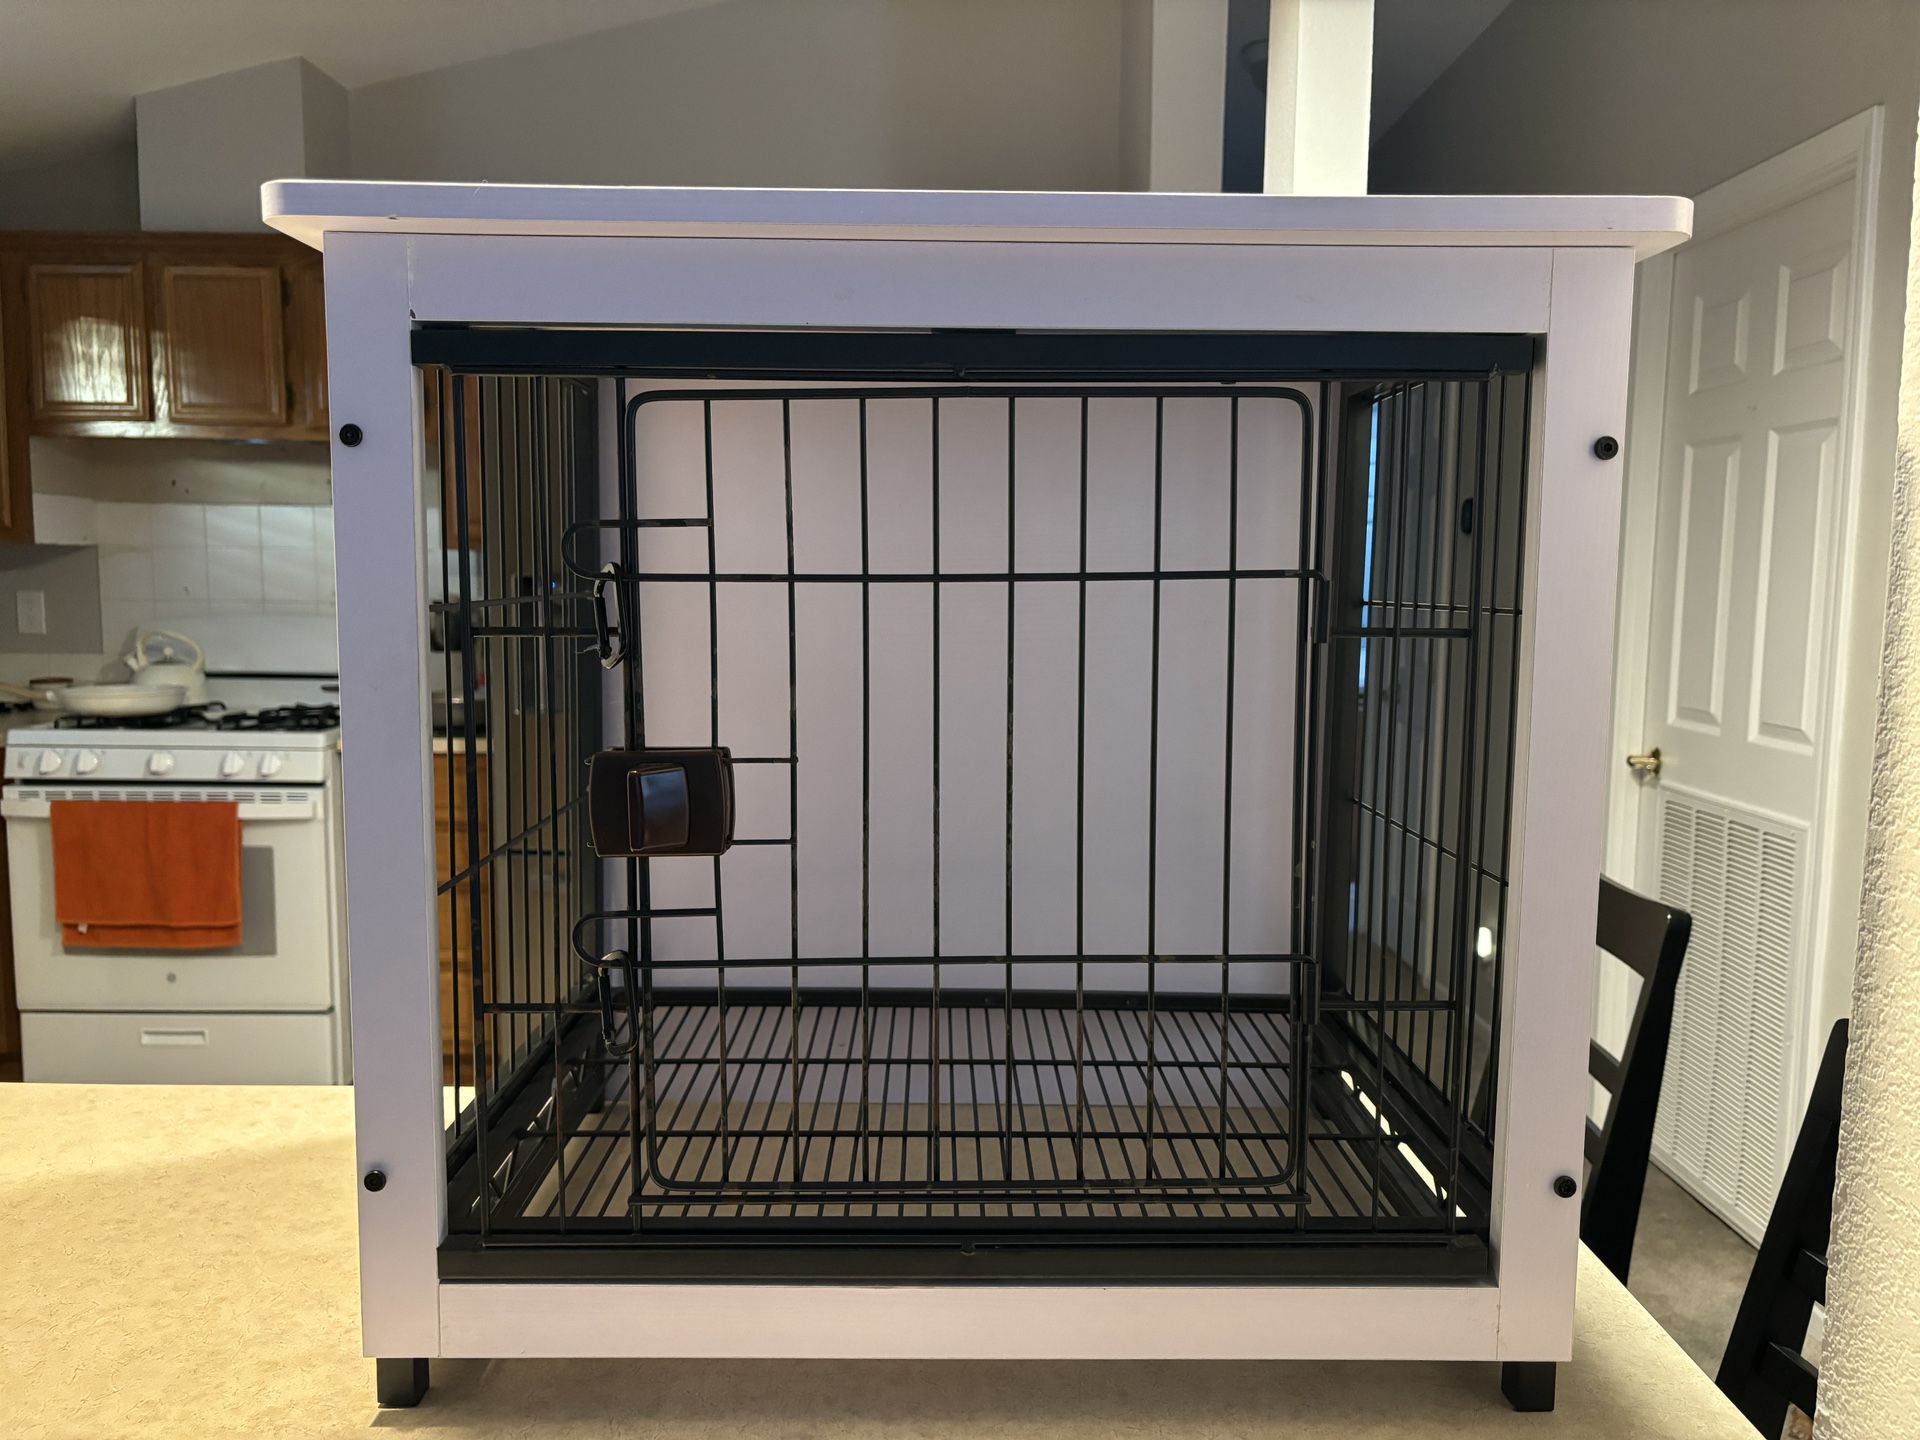 Lockable Dog Crate